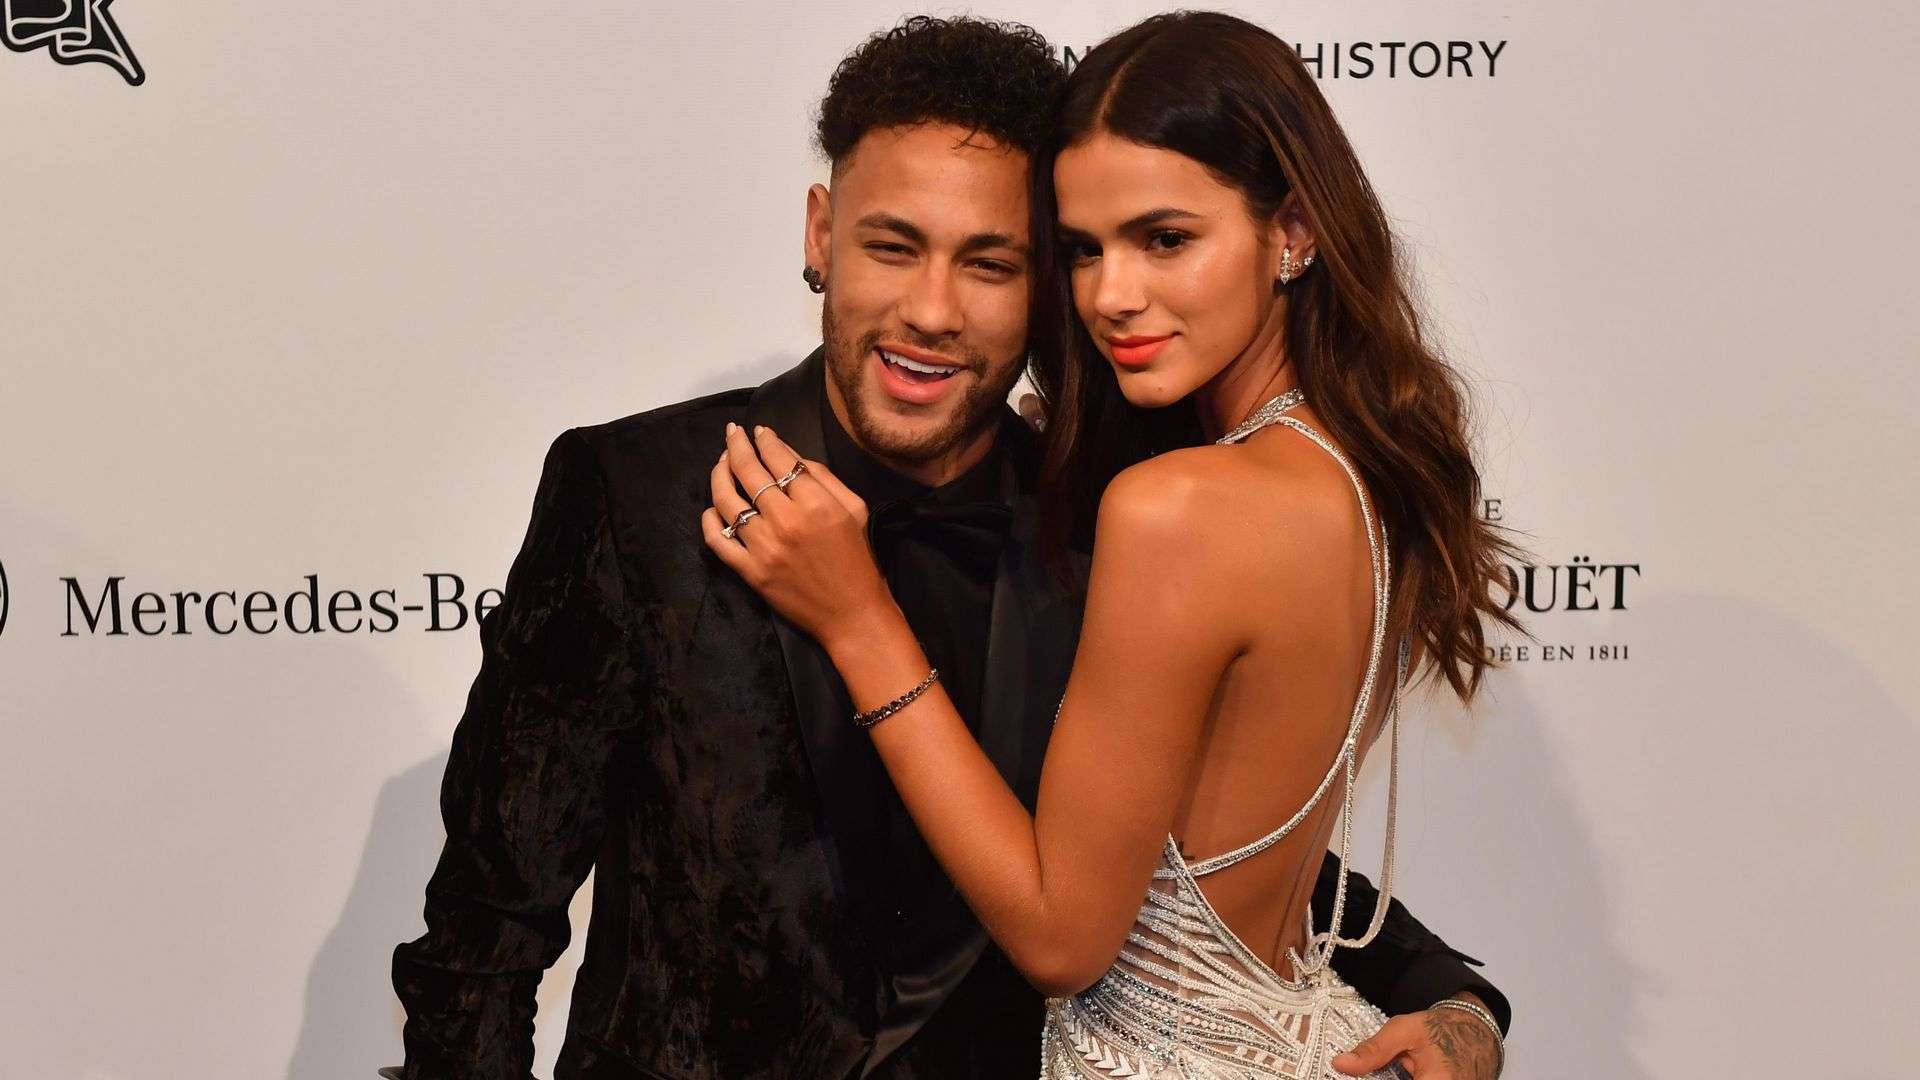 Neymar and his girlfriend Bruna Marquezine